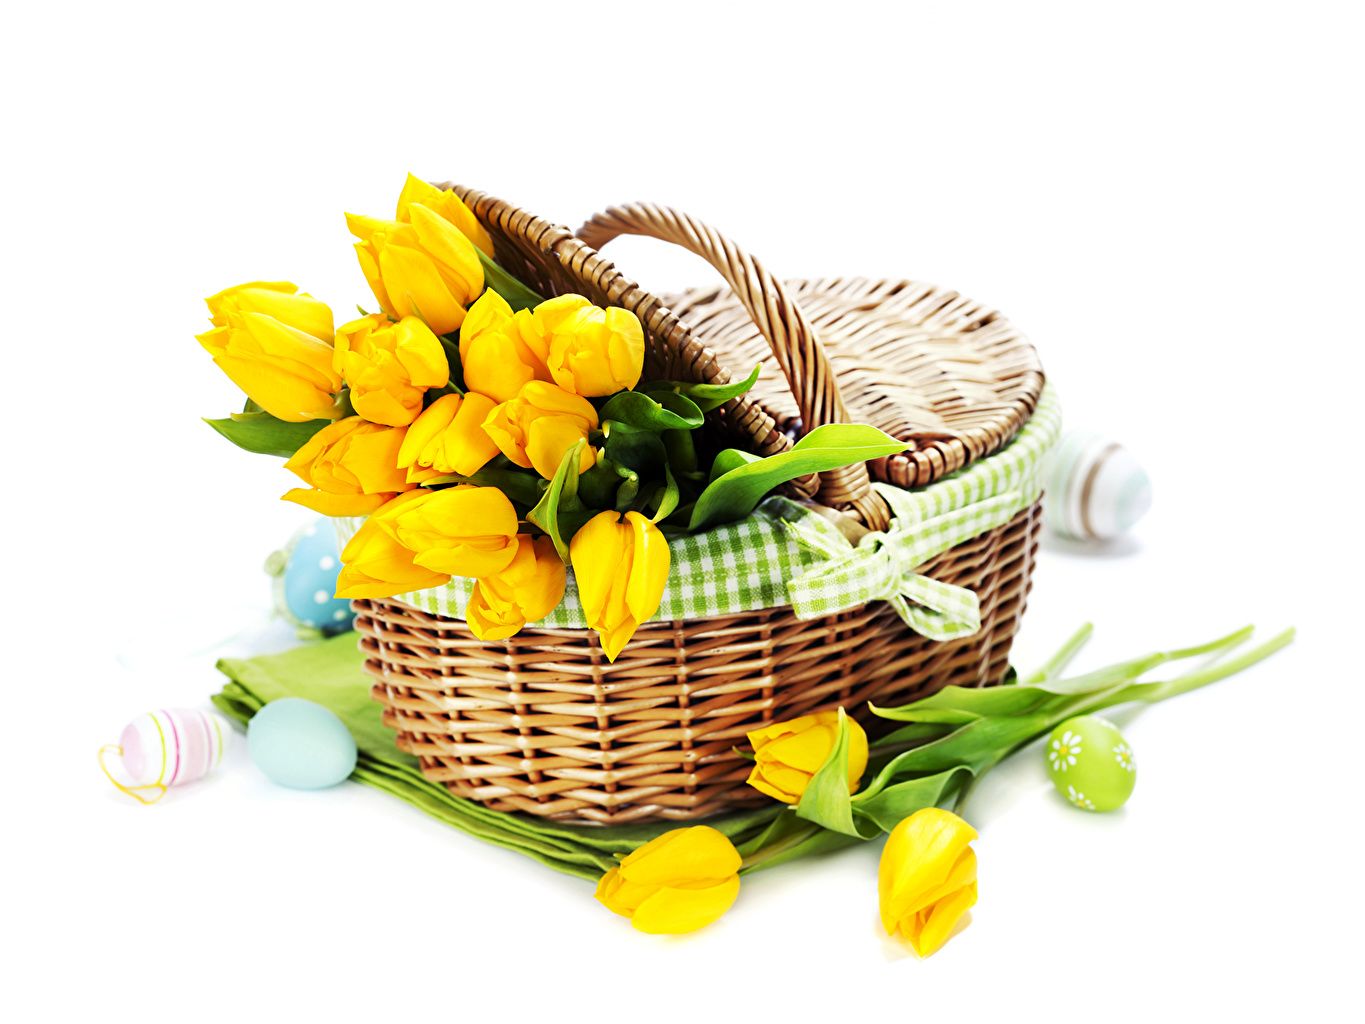 Image Easter egg tulip Yellow Flowers Wicker basket